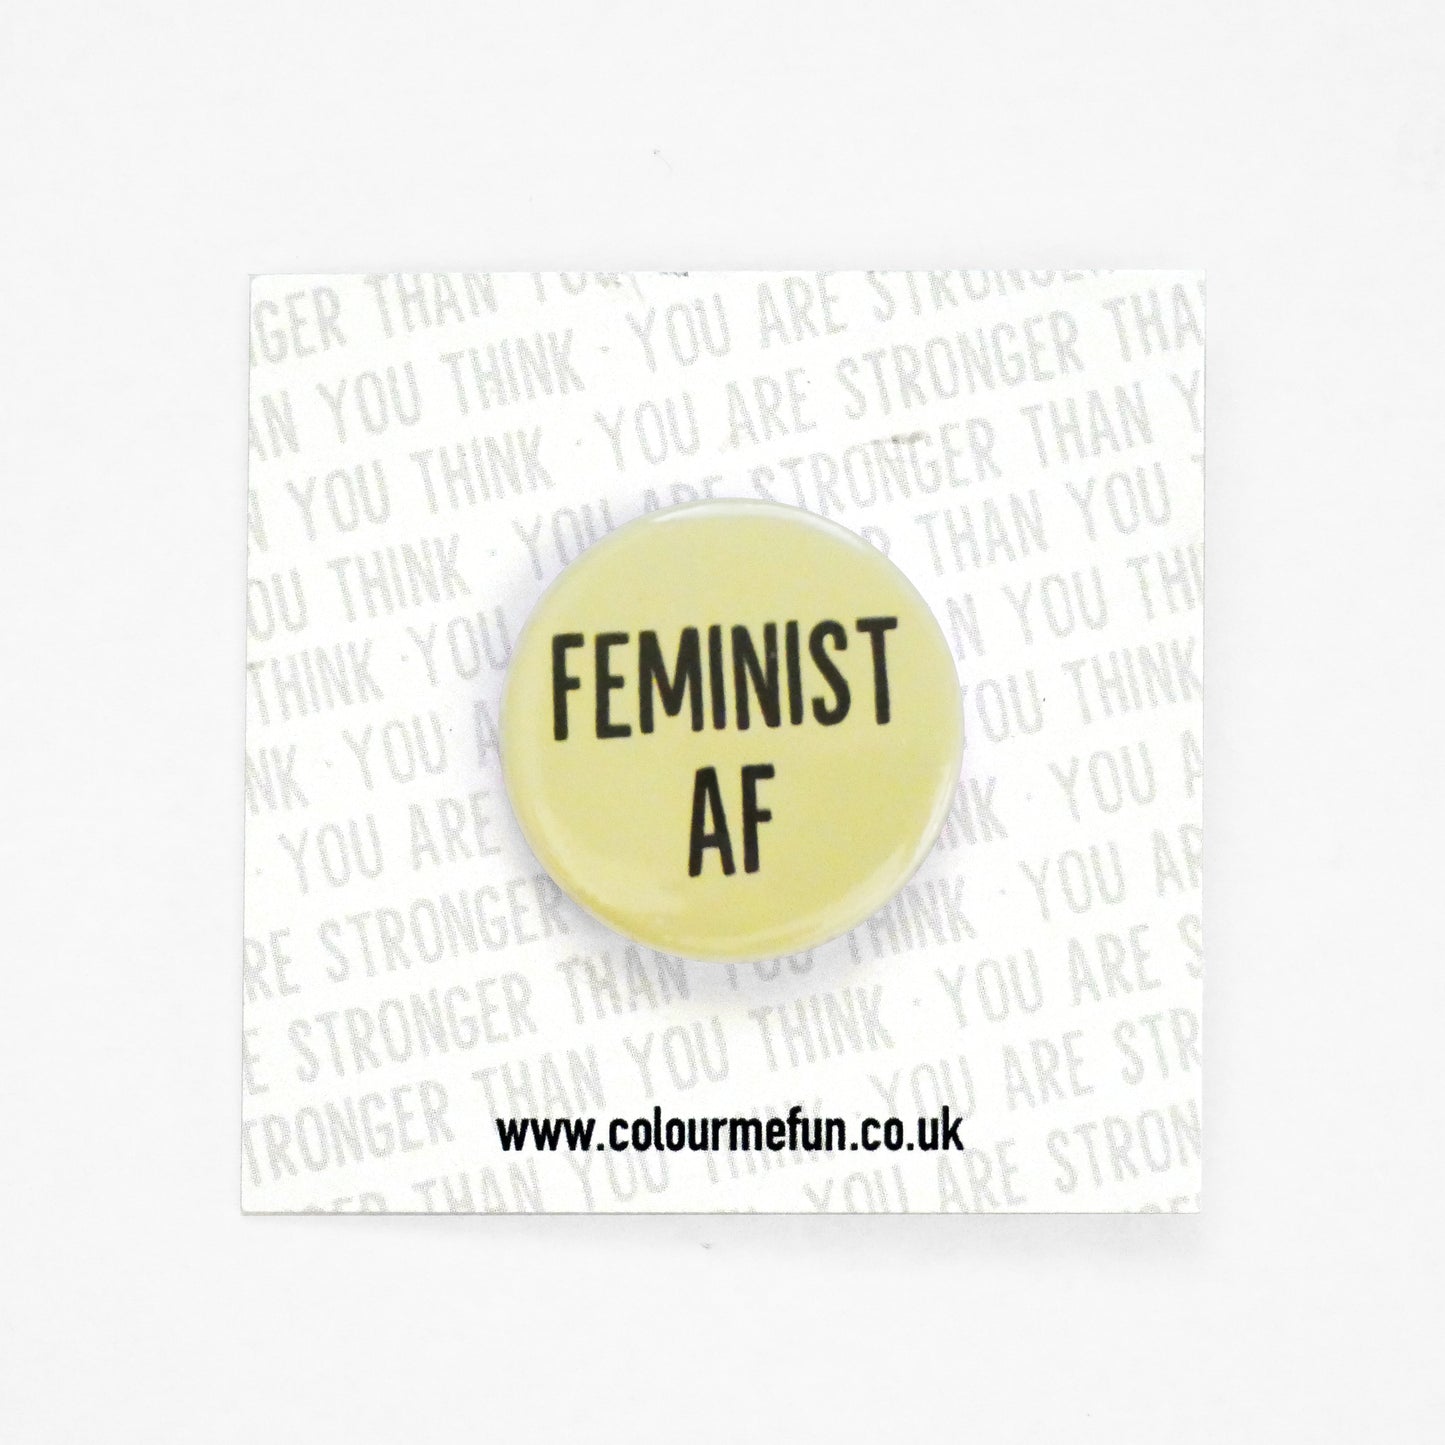 'Feminist AF' Feminist Pin Button Badge